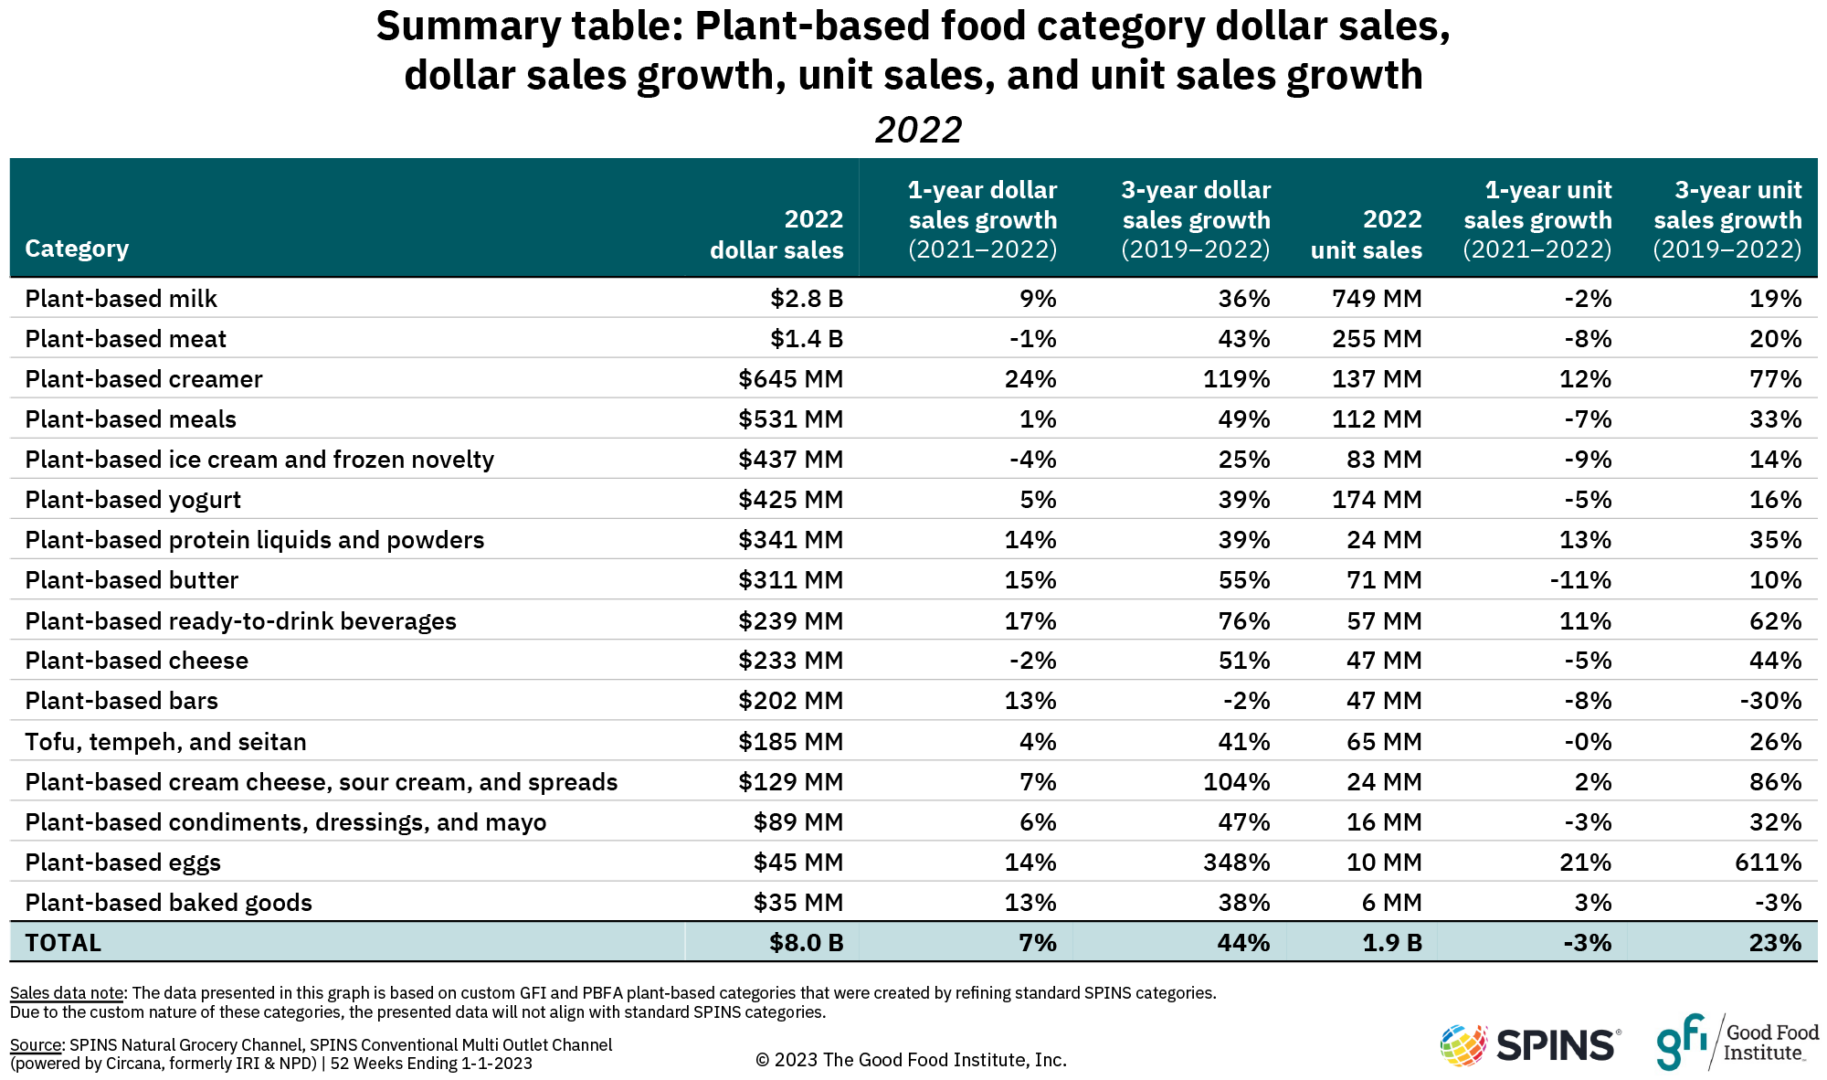 Summary table: plant-based food category dollar sales, dollar sales growth, unit sales, and unit sales growth, 2022